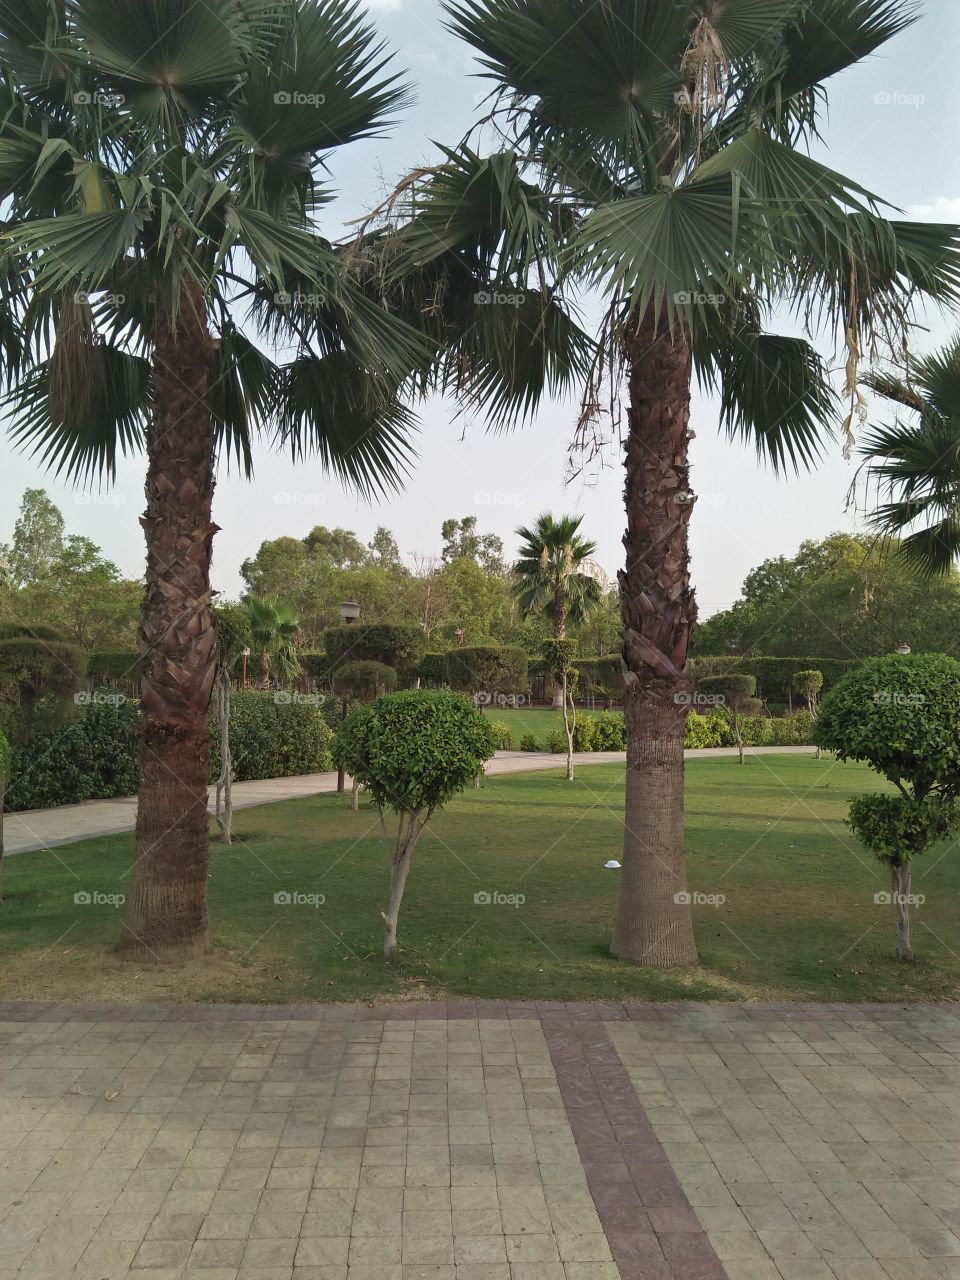 Jindal Park